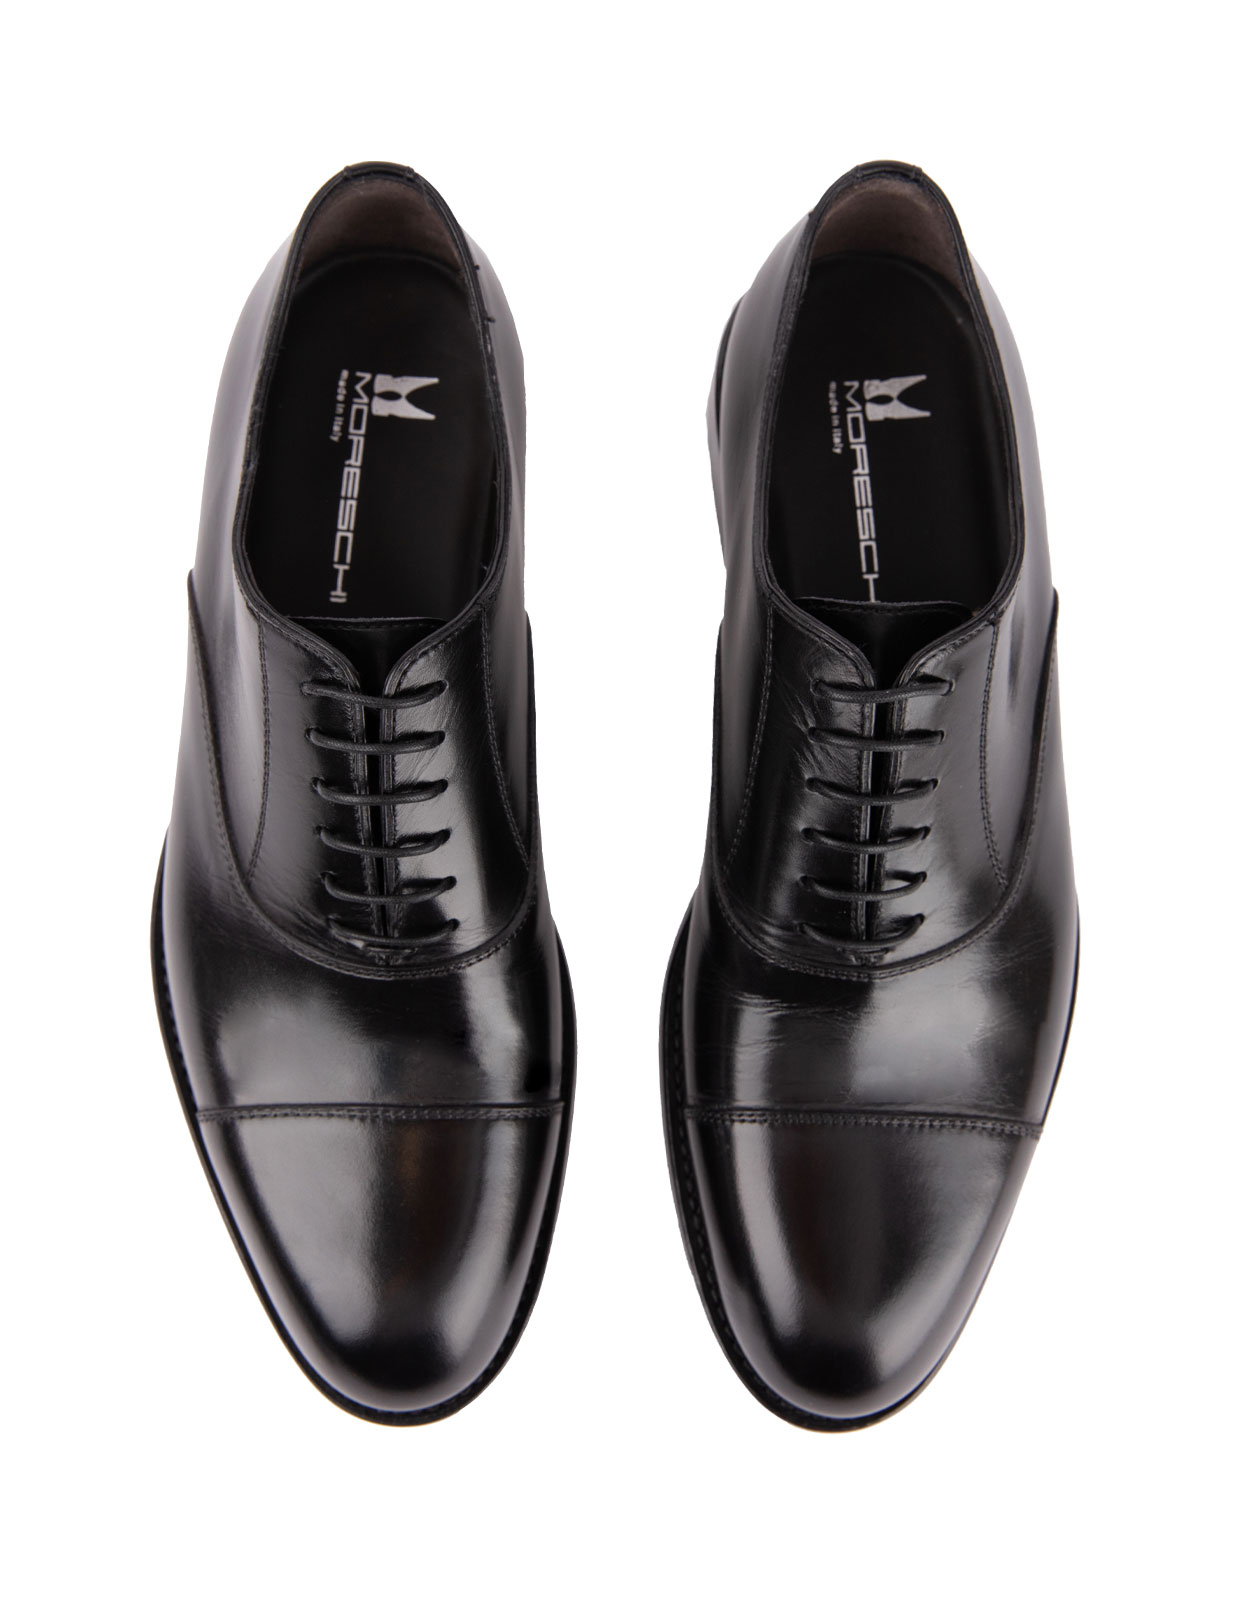 New York Oxford Shoes Calfskin Black Stl 8